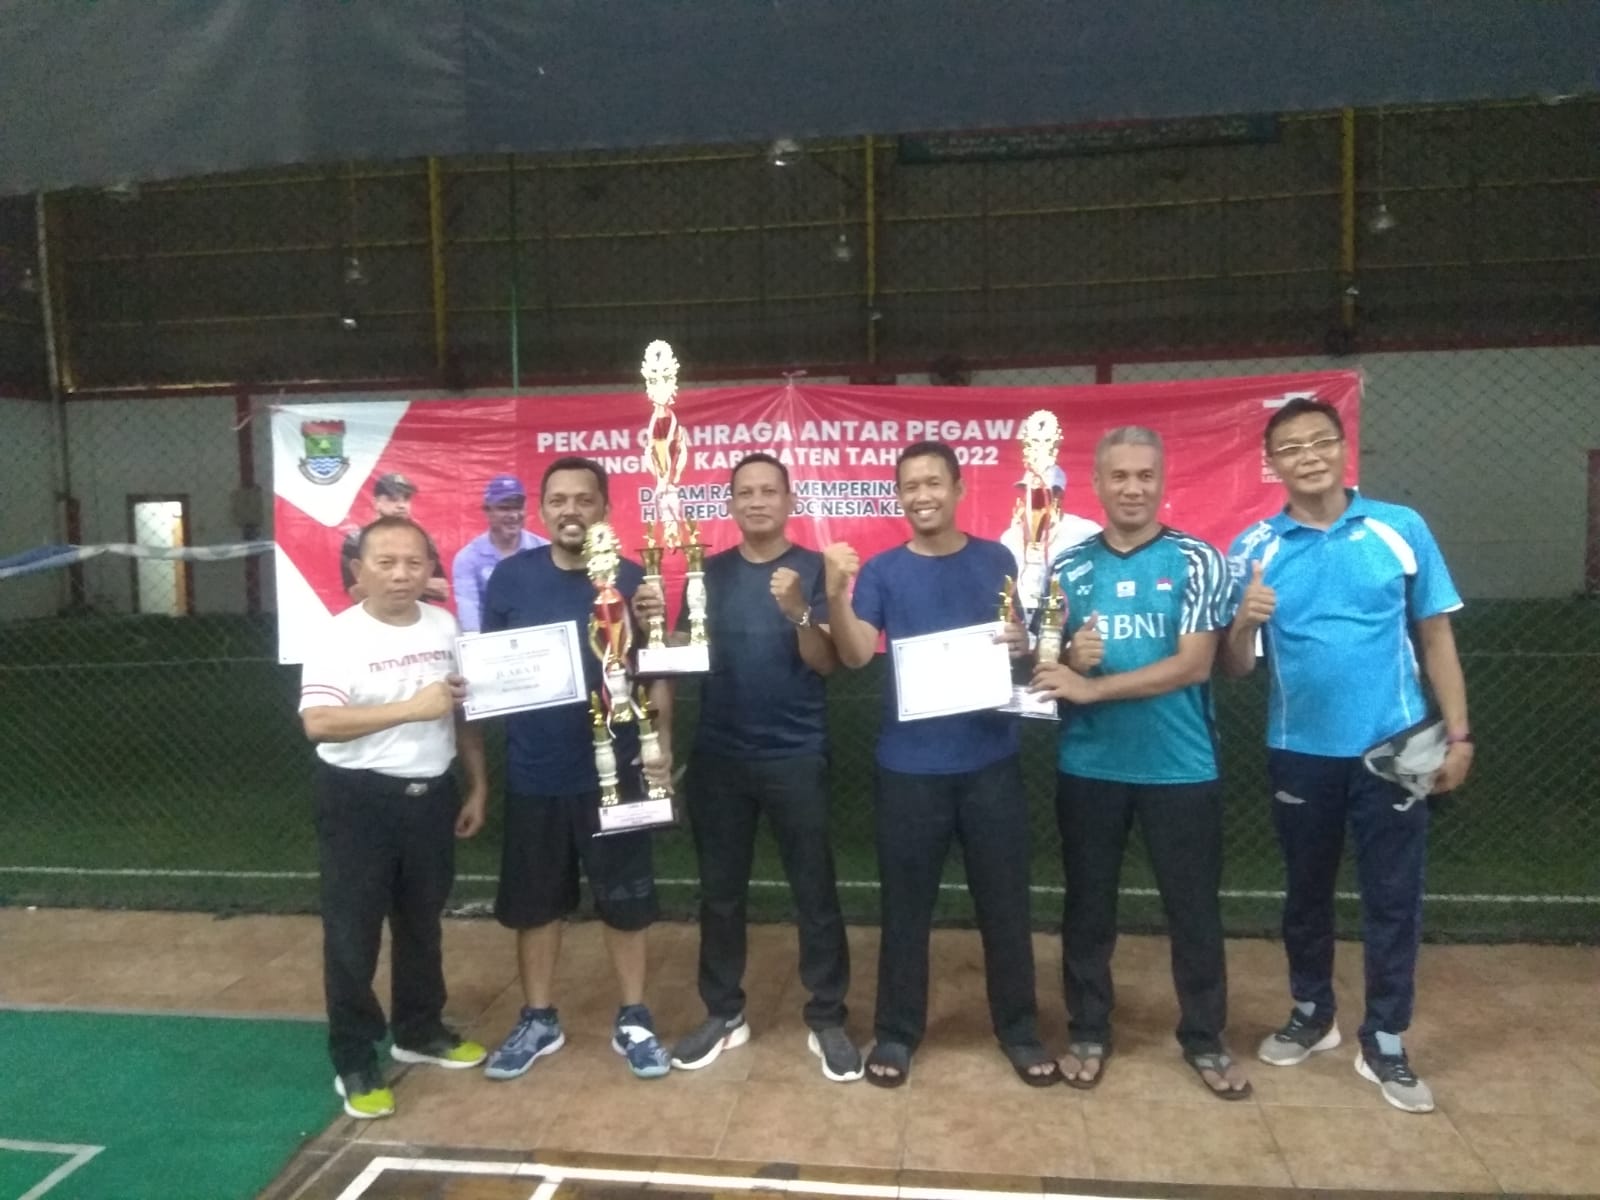 POR Antar Pegawai Pemkab Tangerang Tahun 2022 Selesai, Cabang Bulutangkis Juara 3 Bersama BPBD Dan BPKAD